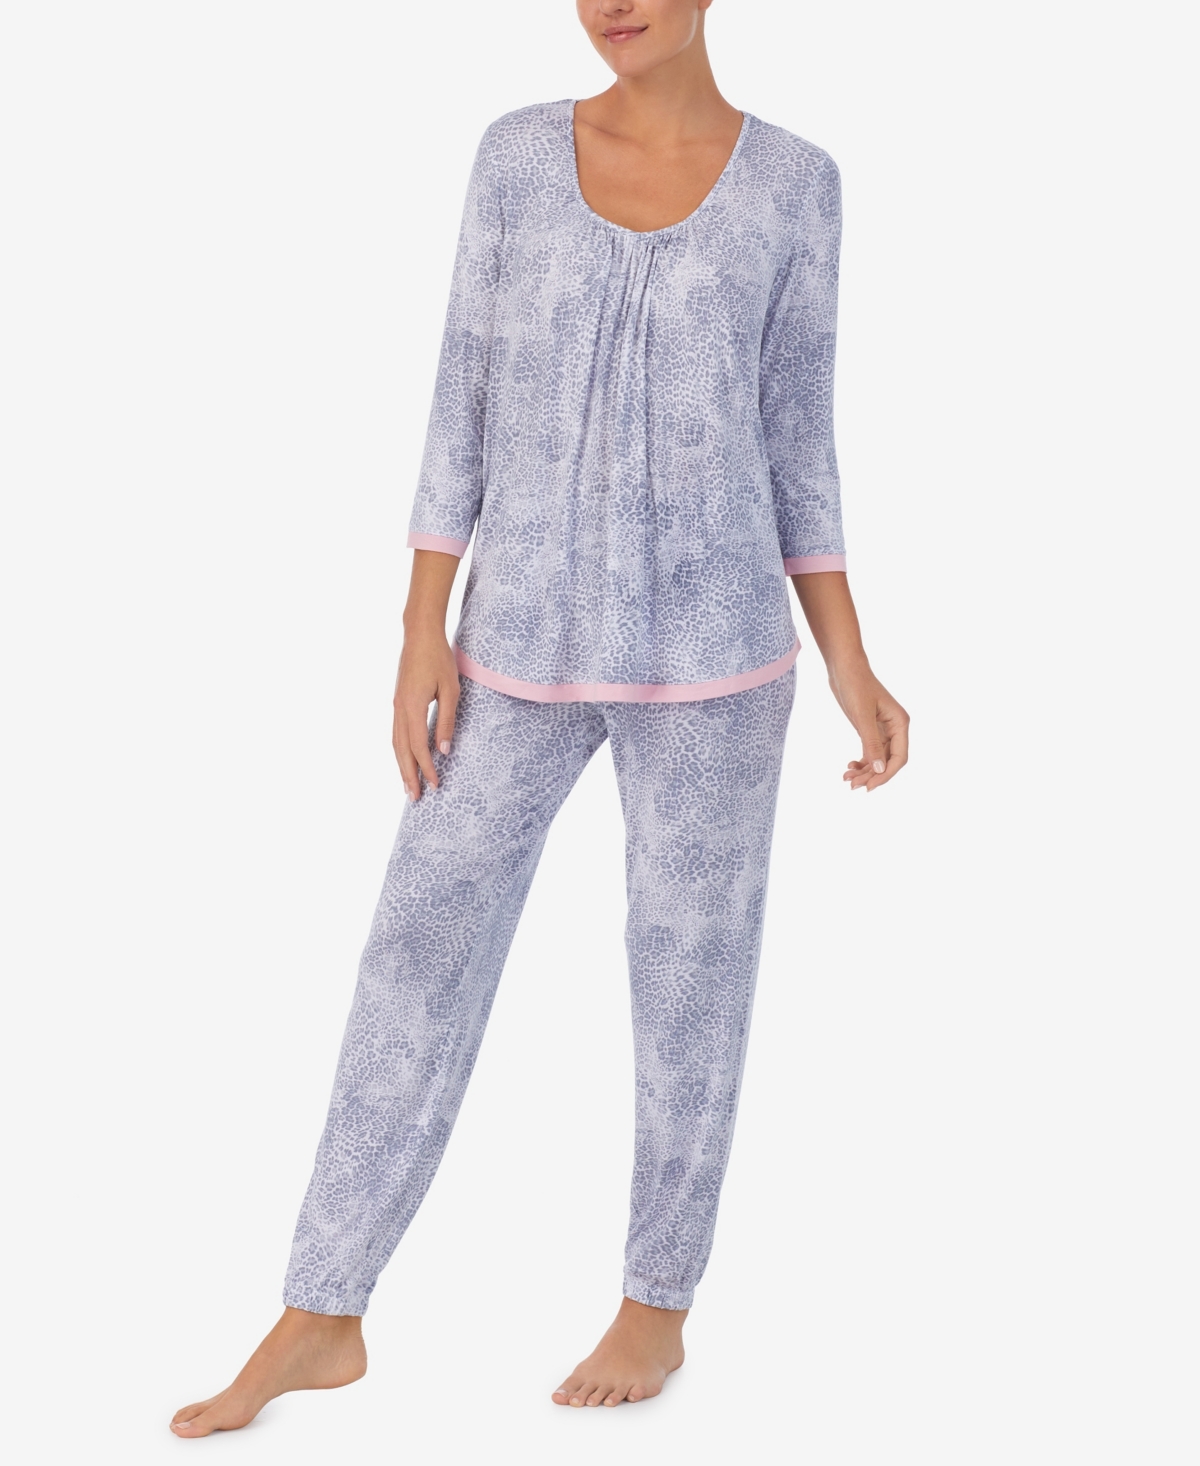 Women's 3/4 Sleeve 2 Piece Pajama Set - Cheetah